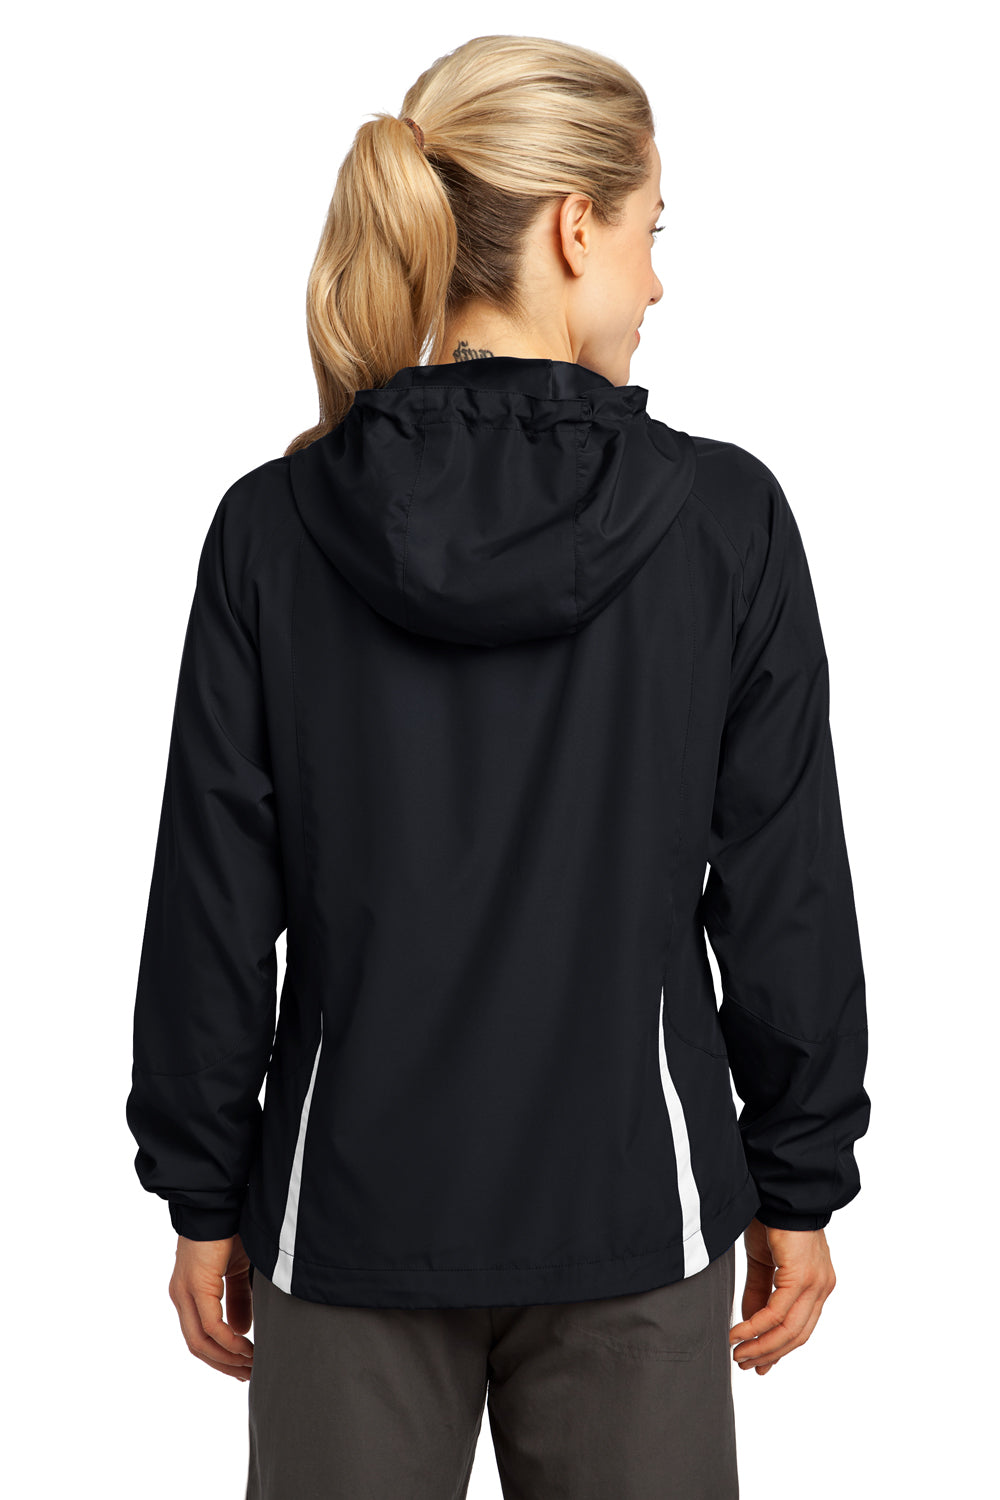 Sport-Tek LST76 Womens Water Resistant Full Zip Hooded Jacket Black Back